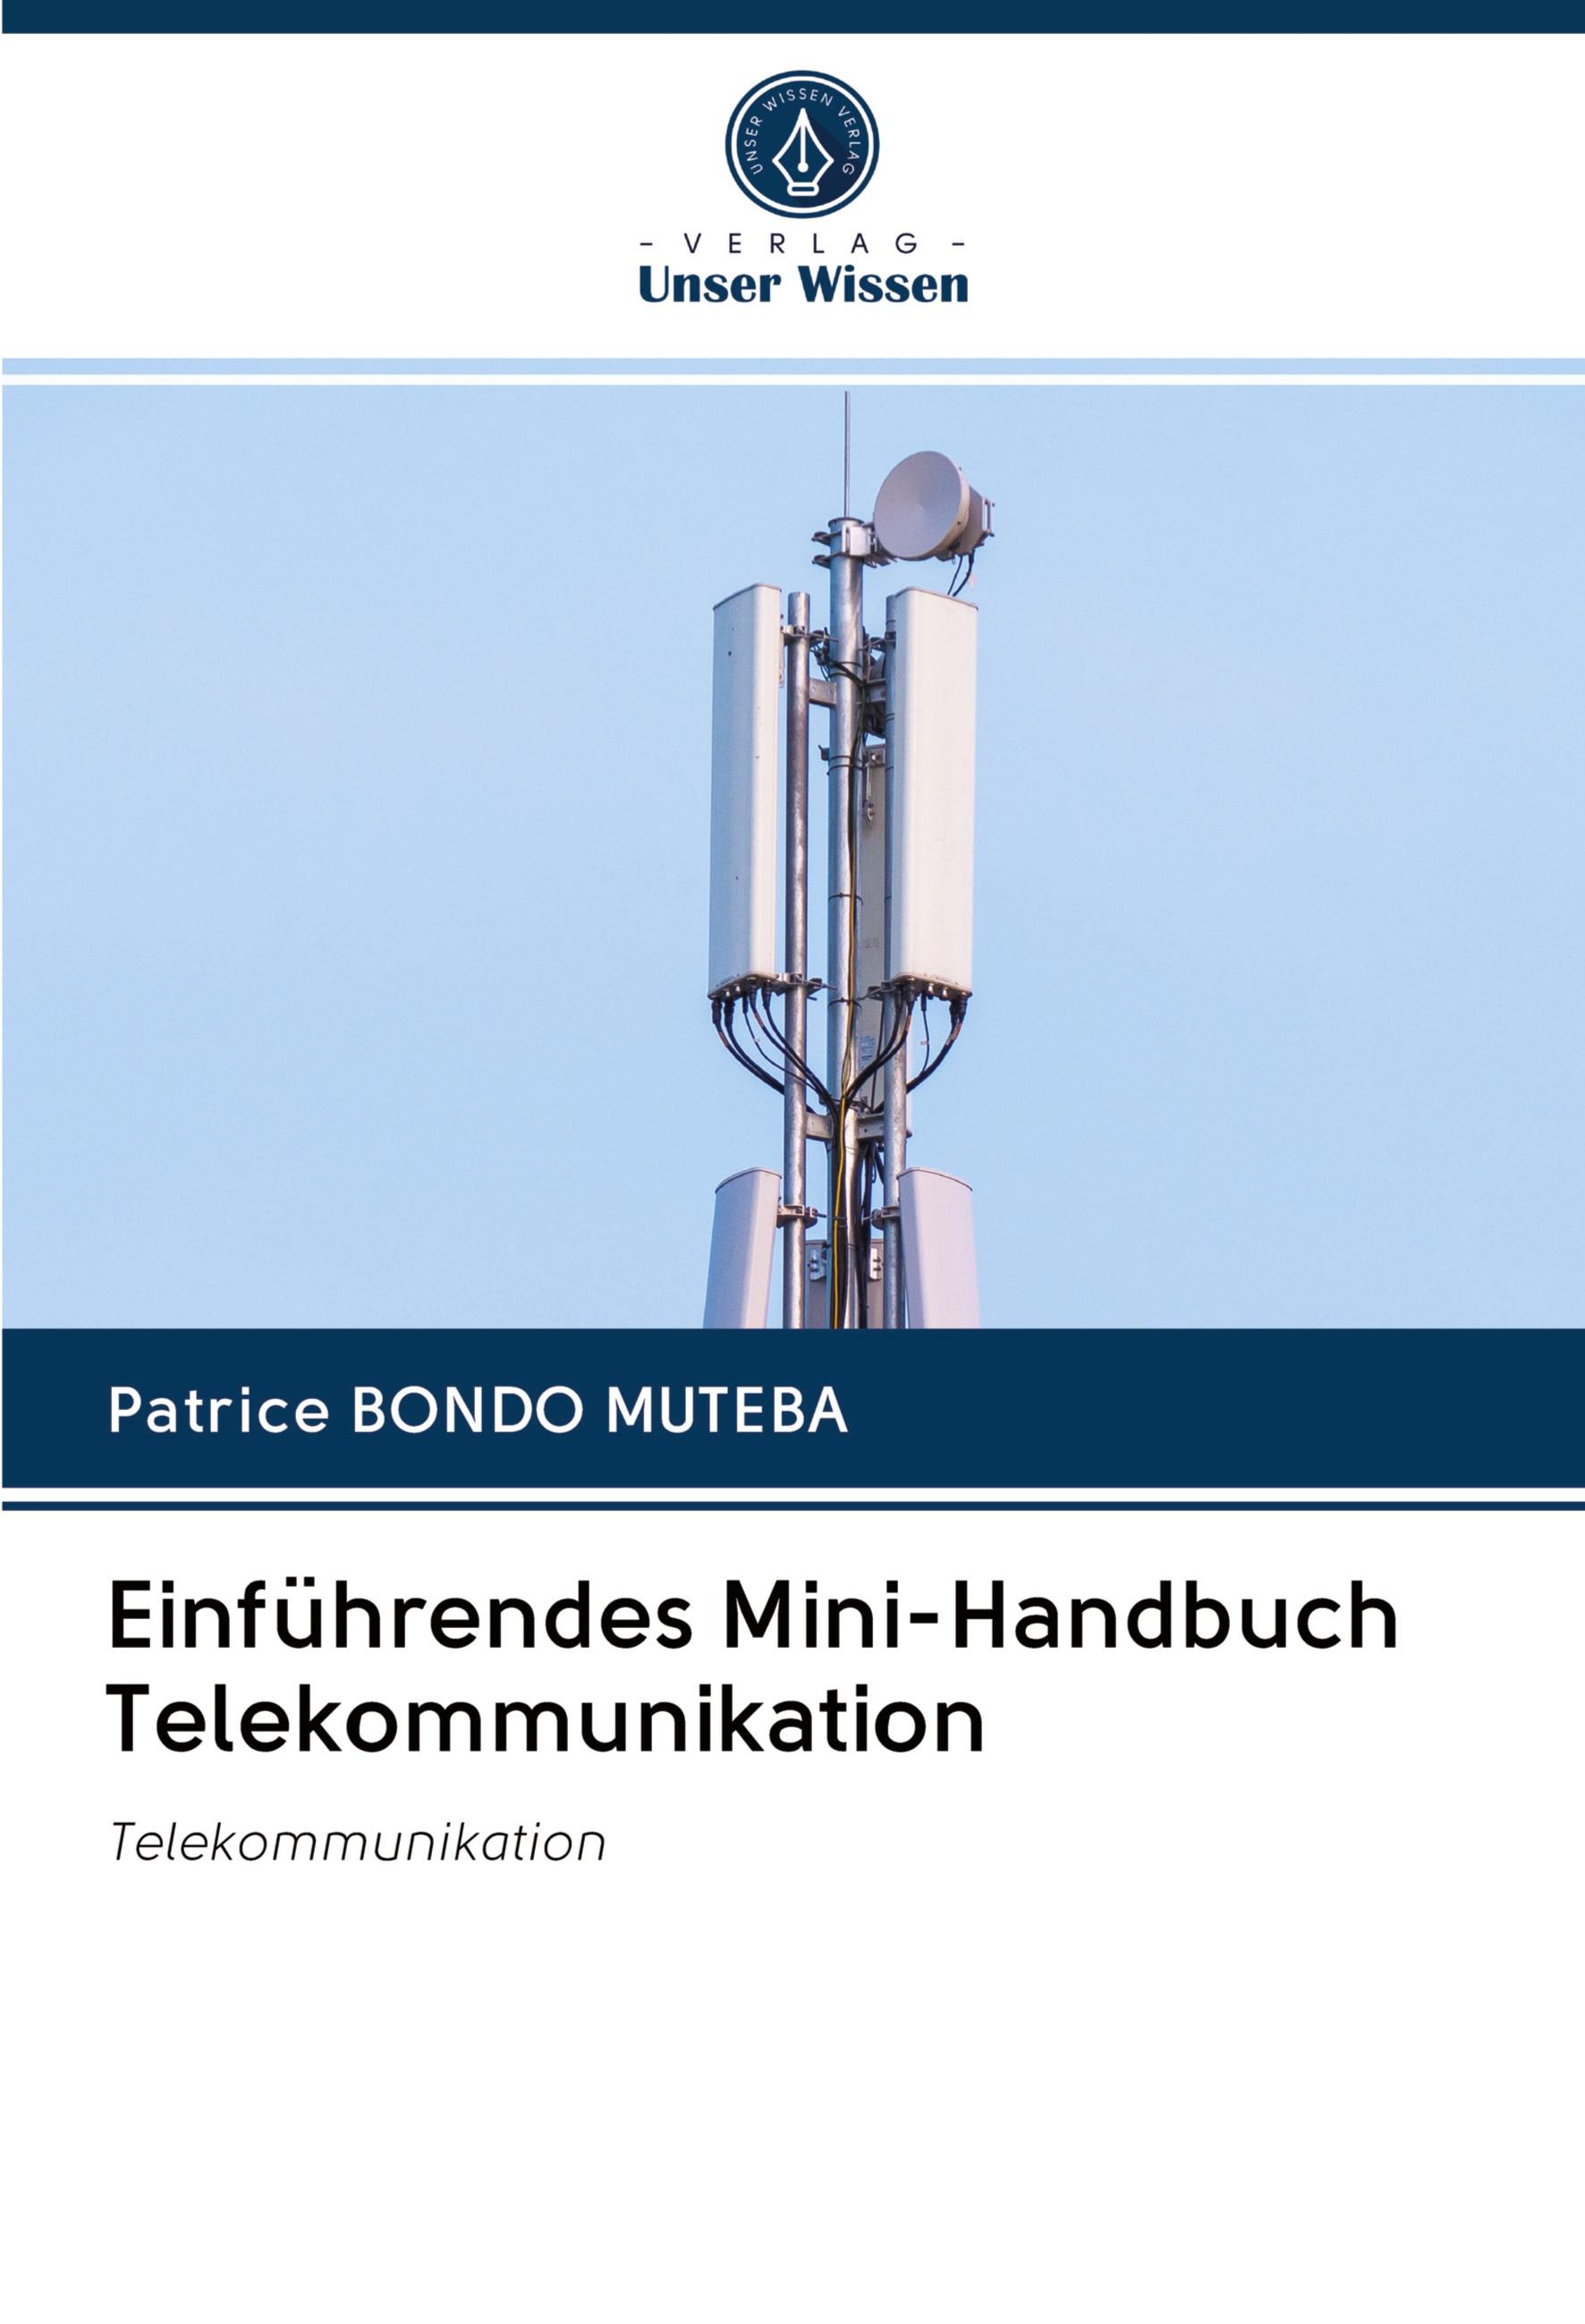 Einfuehrendes Mini-Handbuch Telekommunikation - Bondo Muteba, Patrice